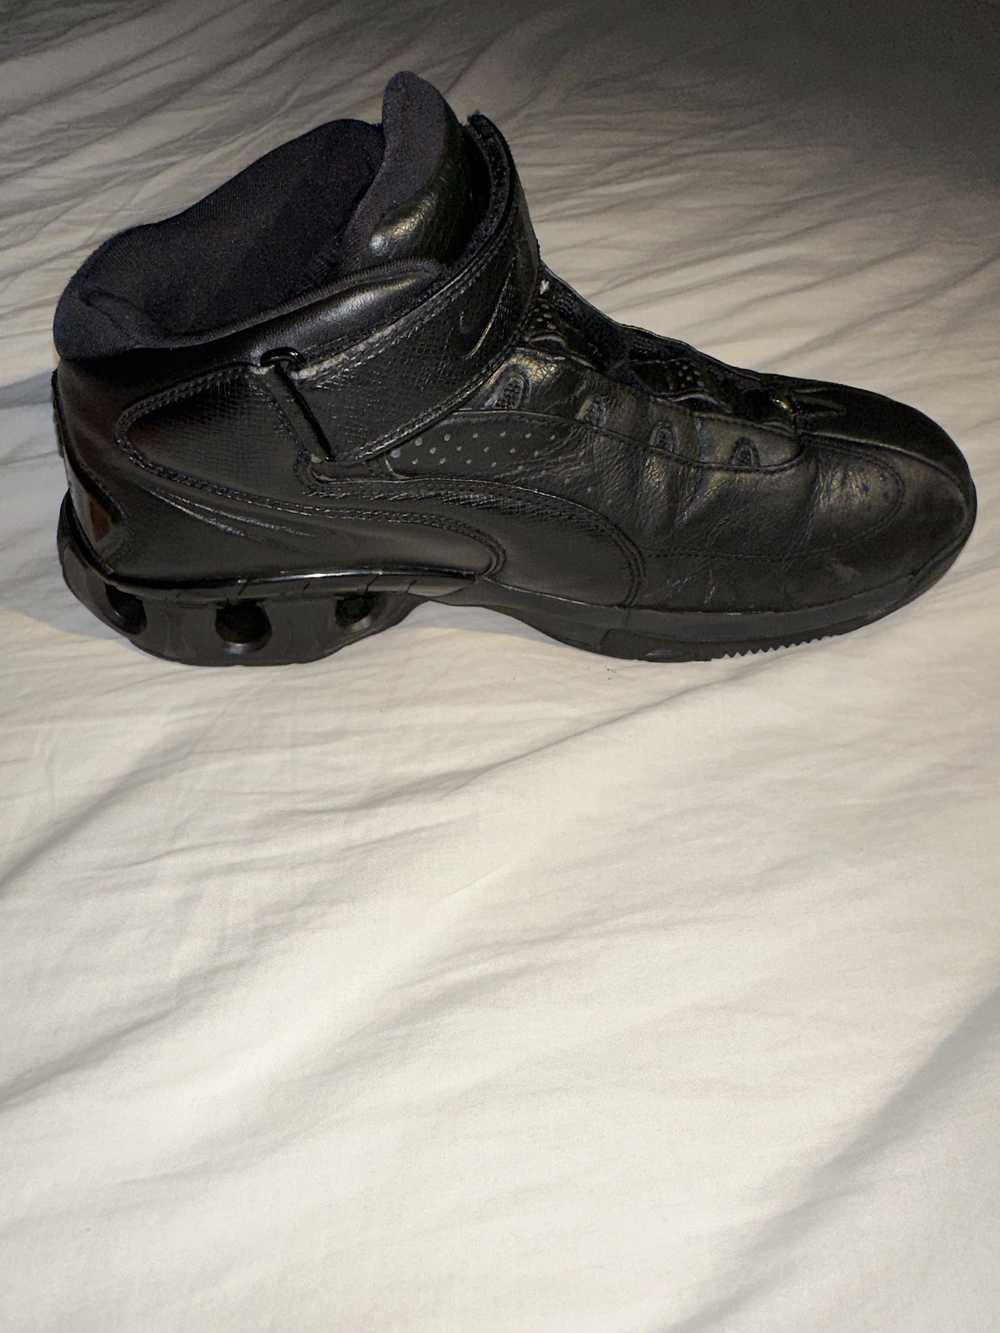 Nike 2005 Nike flight, all black basketball shoe - image 5